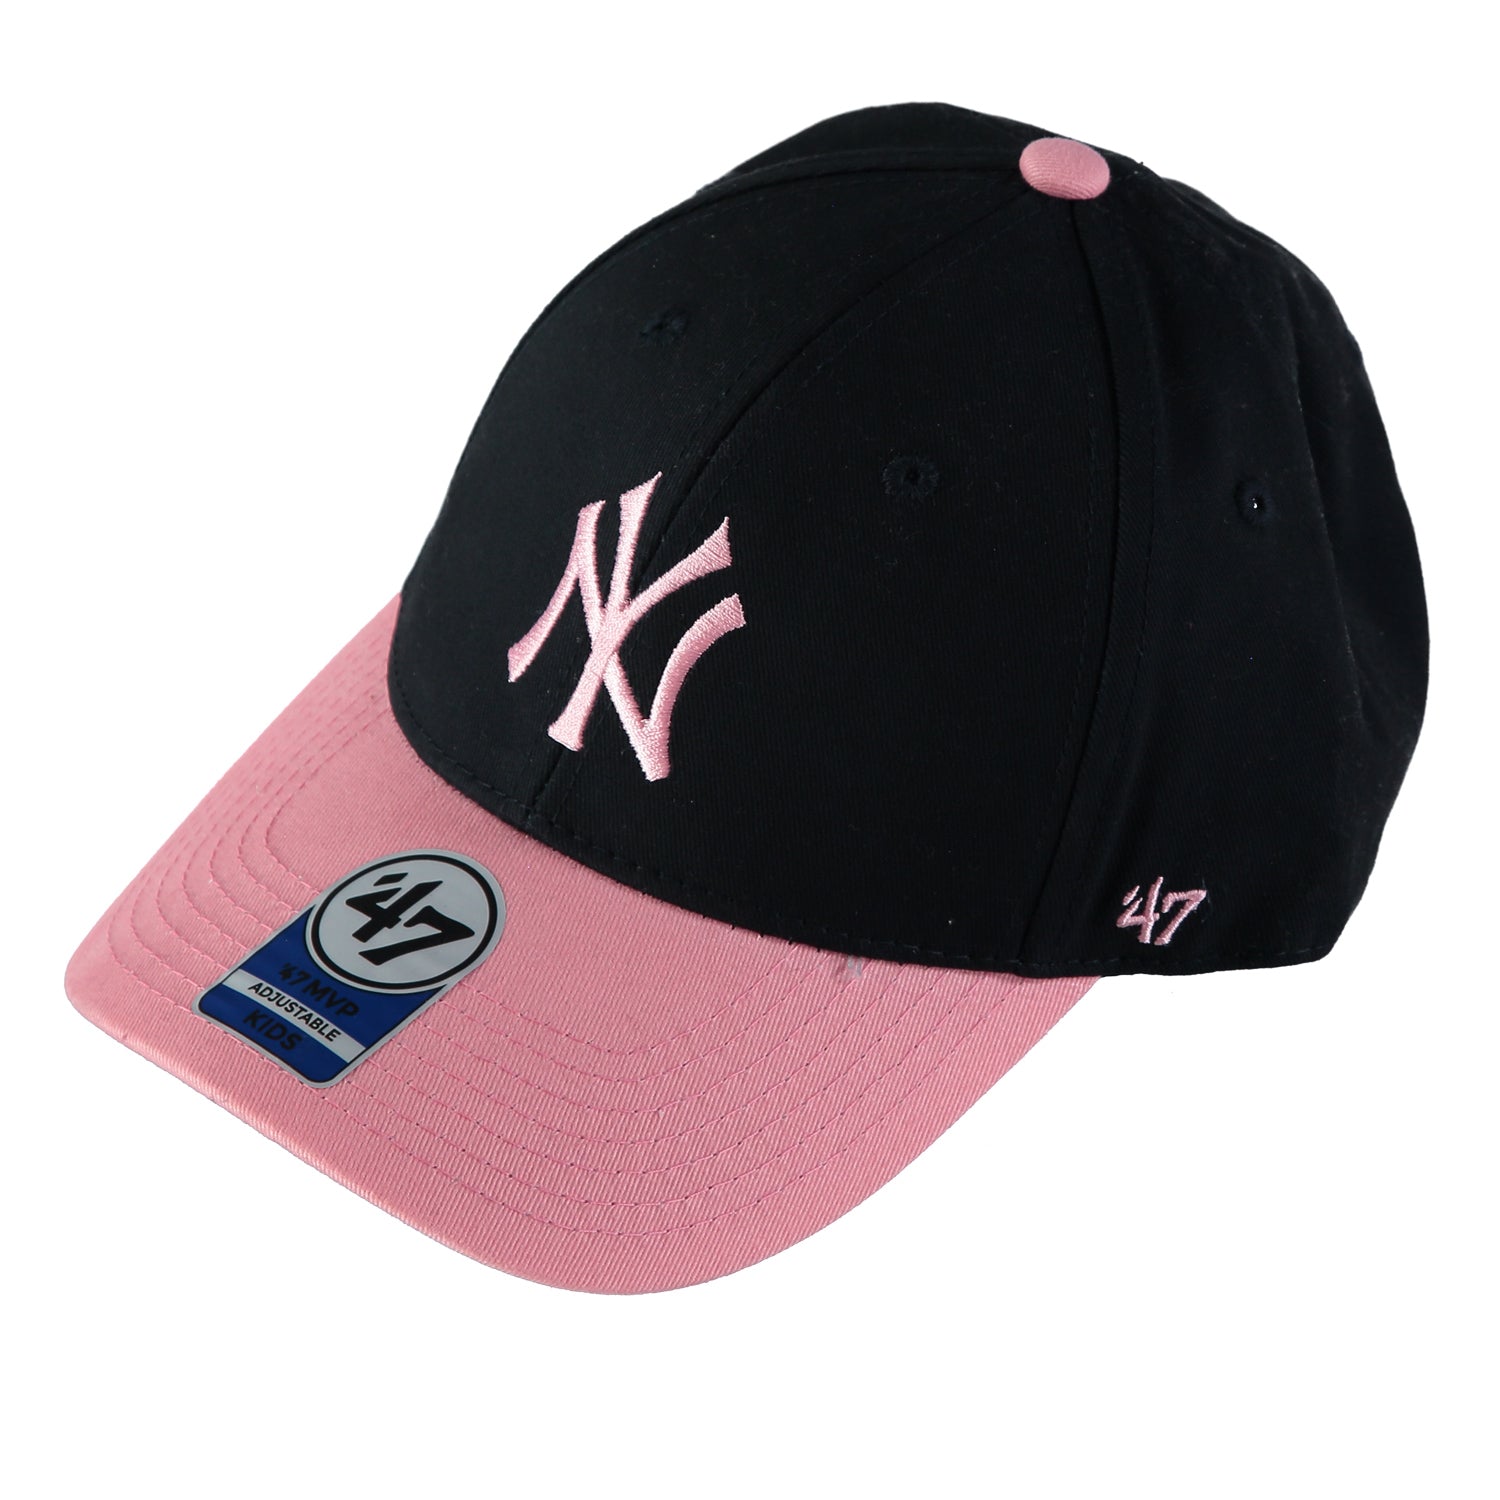 Yankees 47' Girls Two Tone Baseball Cap